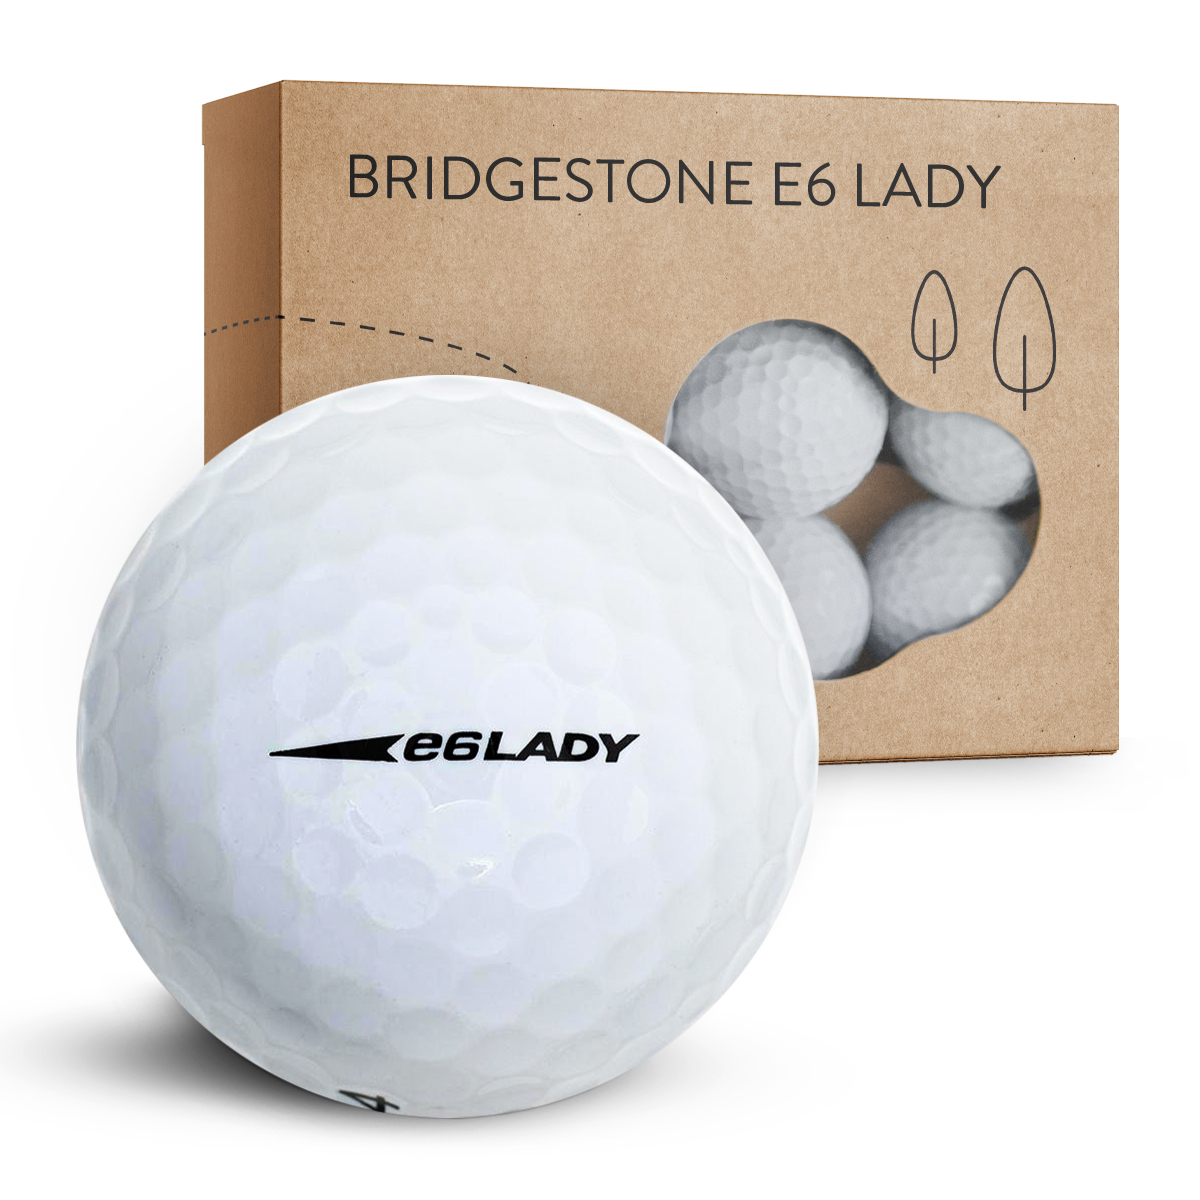 Bridgestone e6 Lady